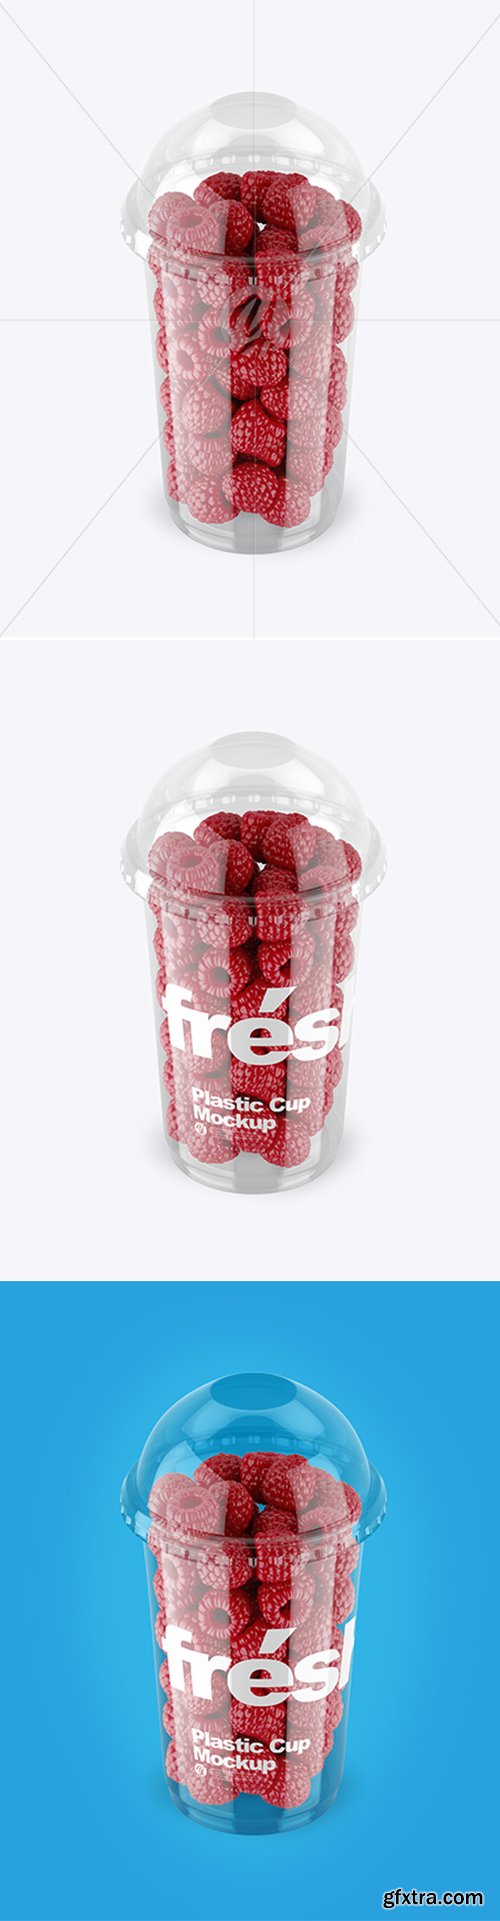 Plastic Cup With Raspberries Mockup 43179